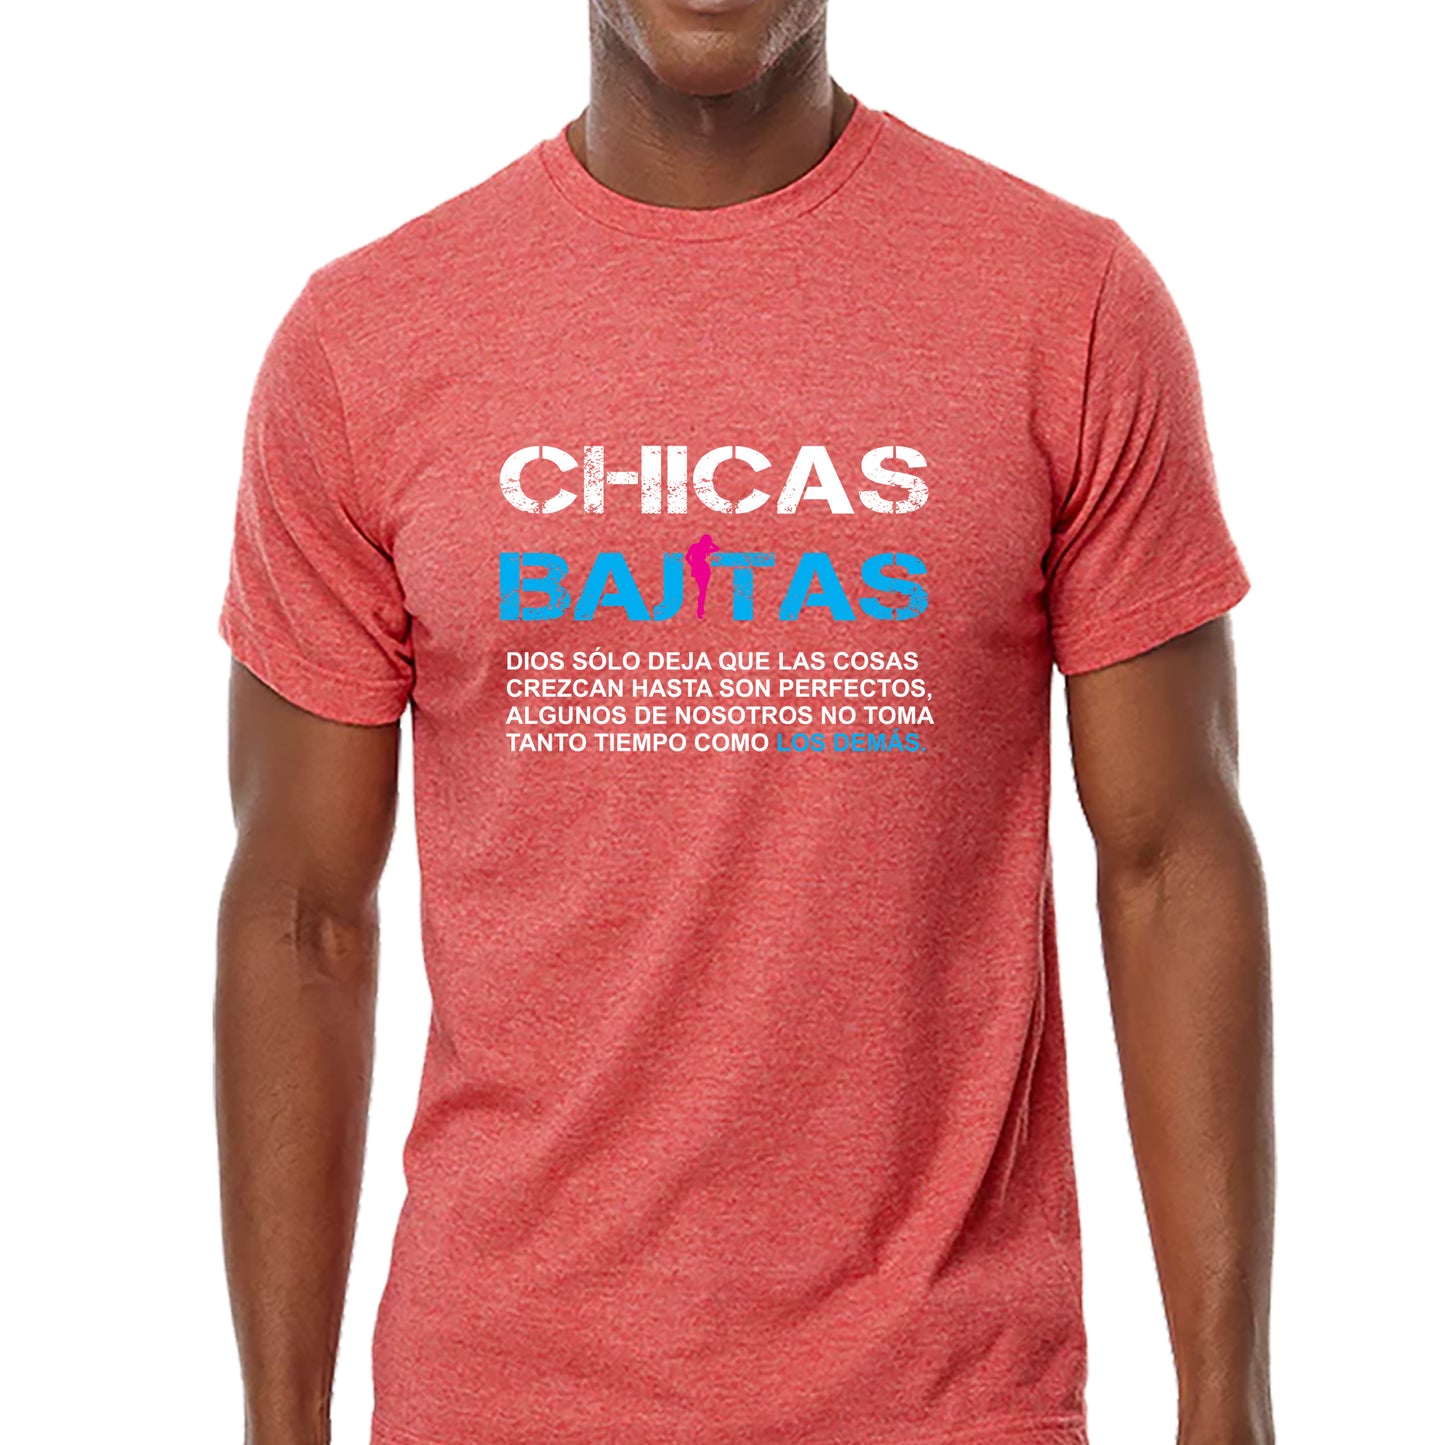 Chicas Bajitas T-shirt